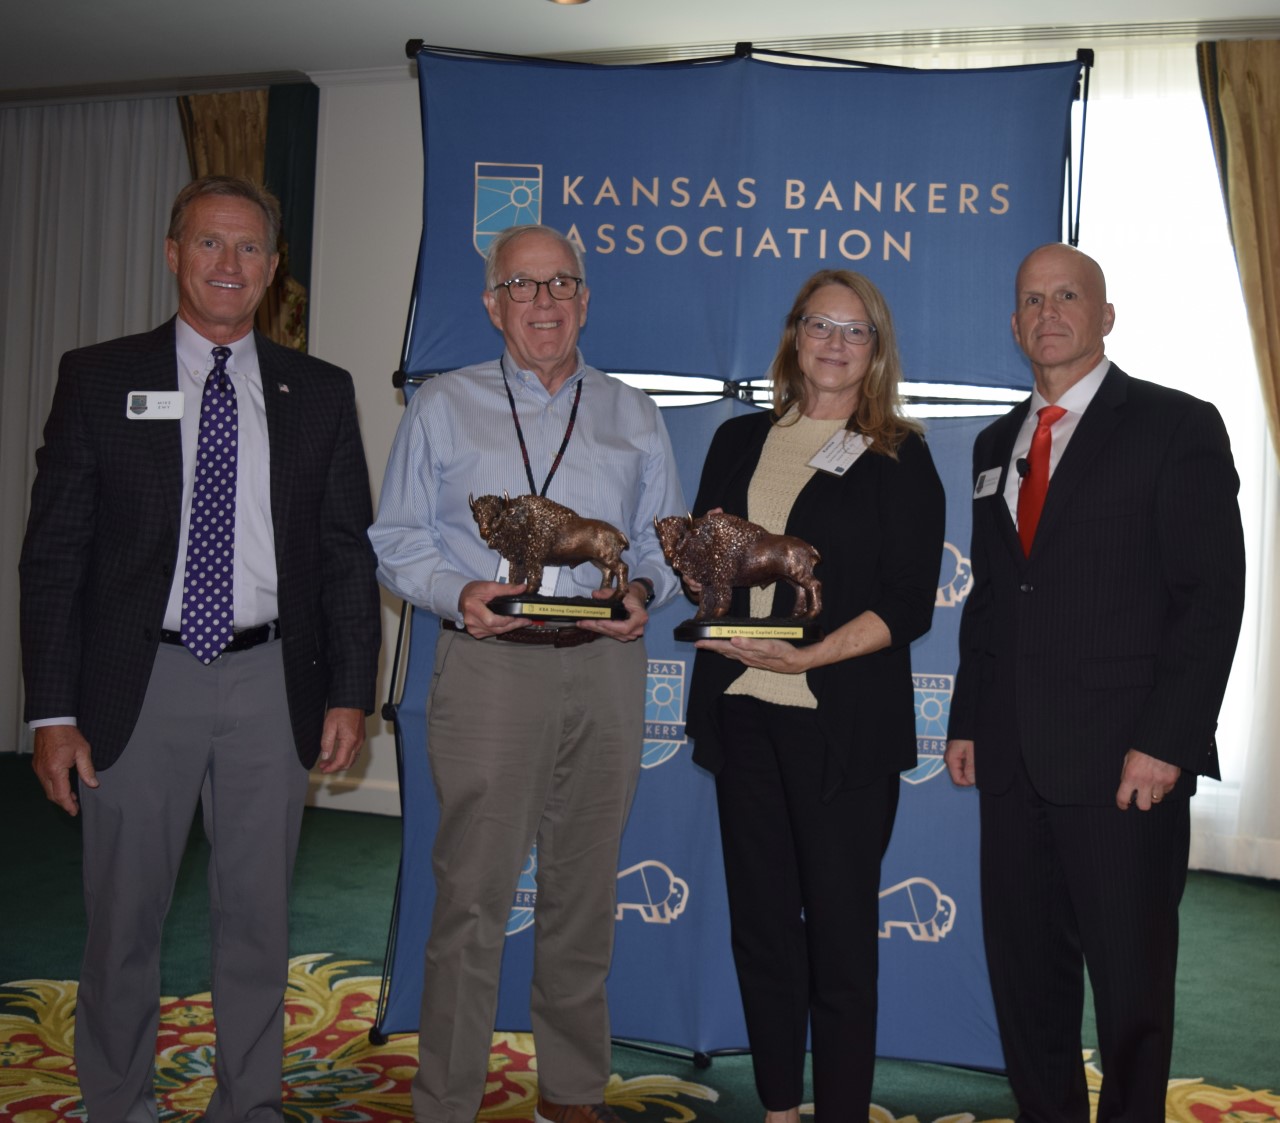 Karesa Harrison receives the FLINT Factor Award on behalf of Farmers Bank & Trust.